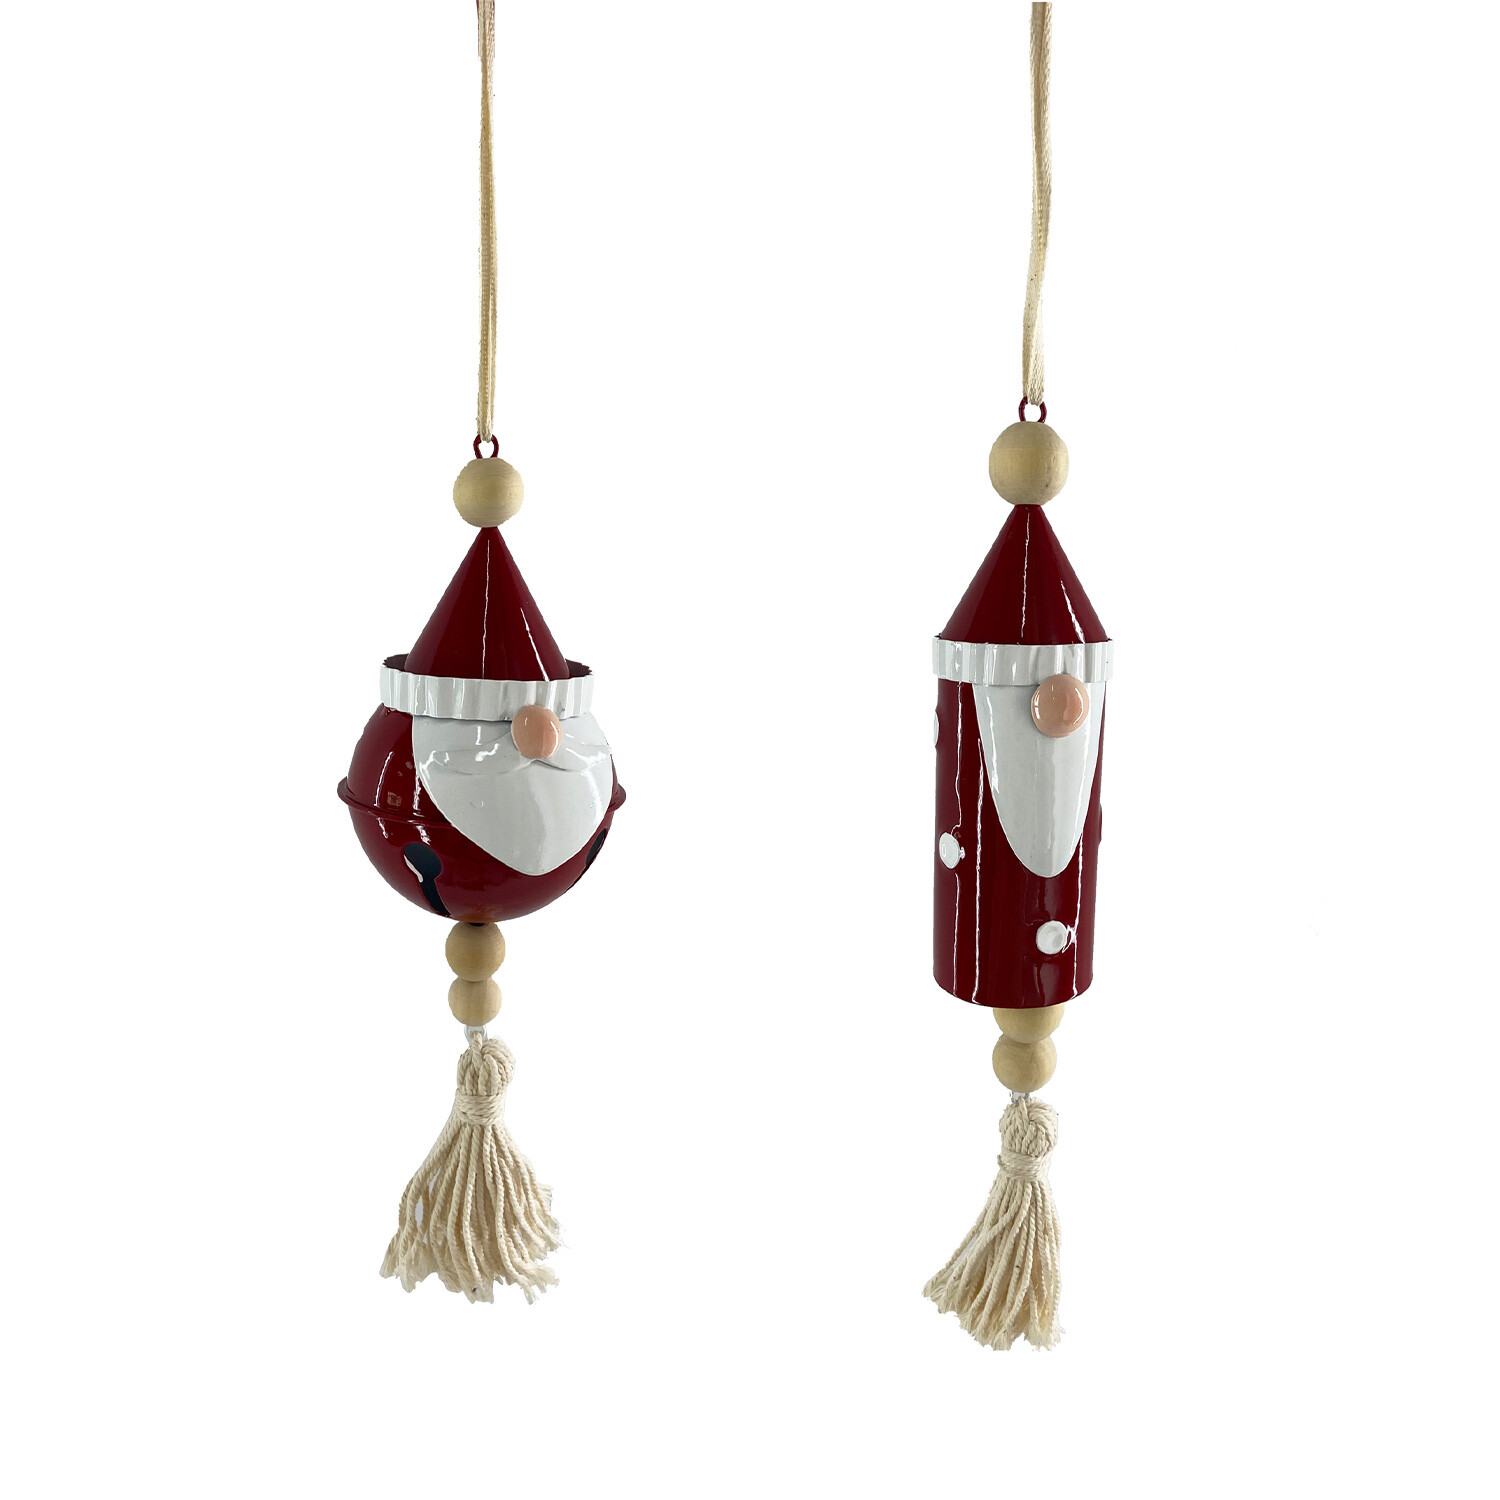 Hanging Santa Bell Decoration - Red Image